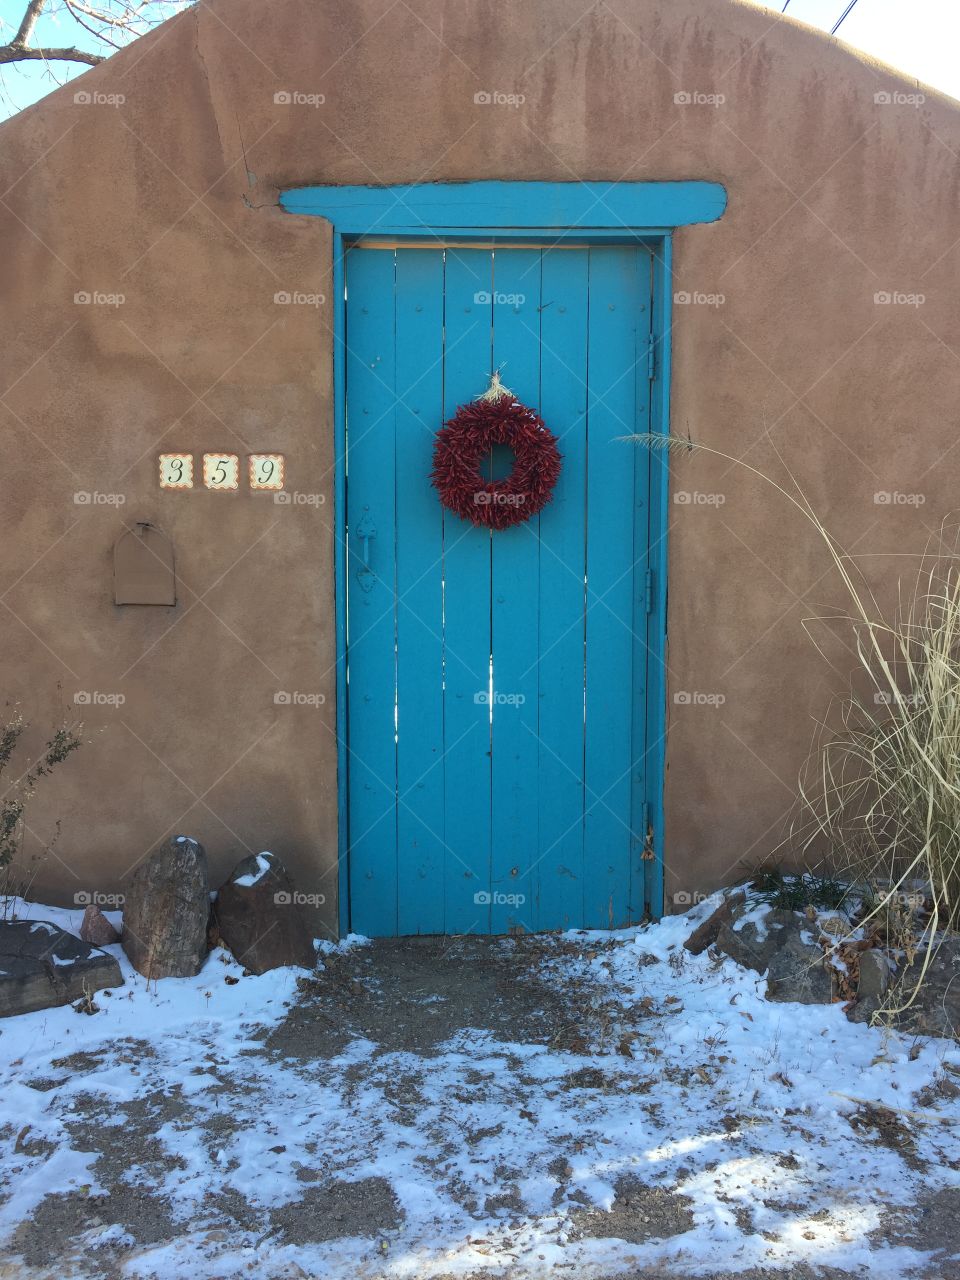 stunning blue door against adobe walls on a Santa Fe home at Christmastime // December 2016